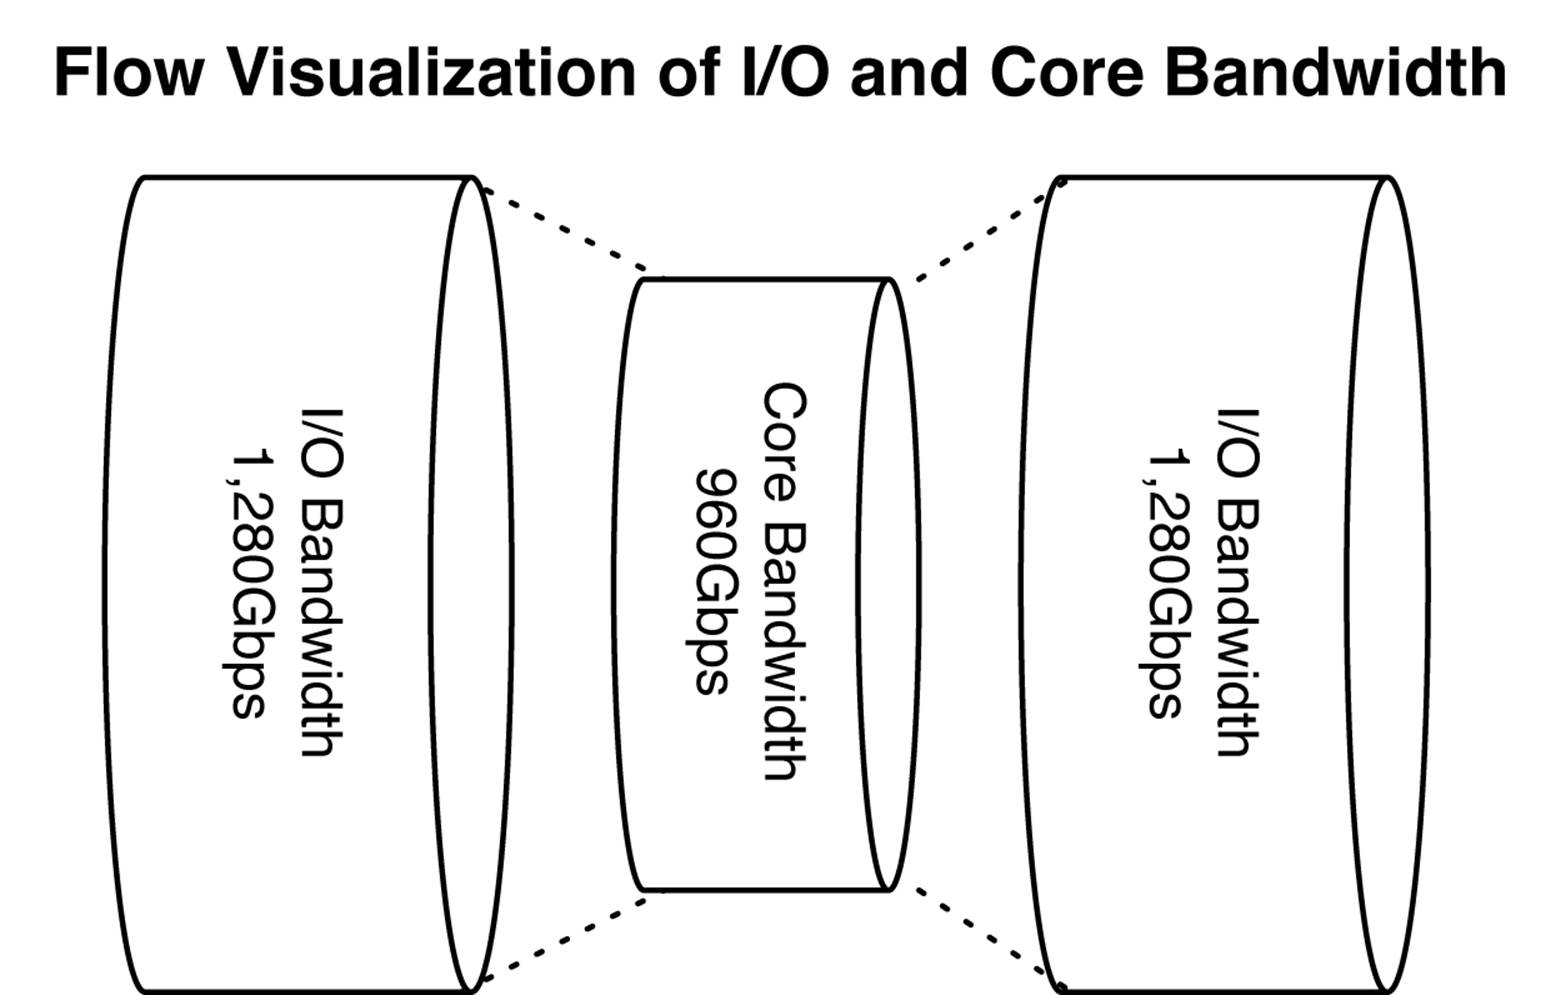 Flow Visualization of I/O and Core Bandwidth